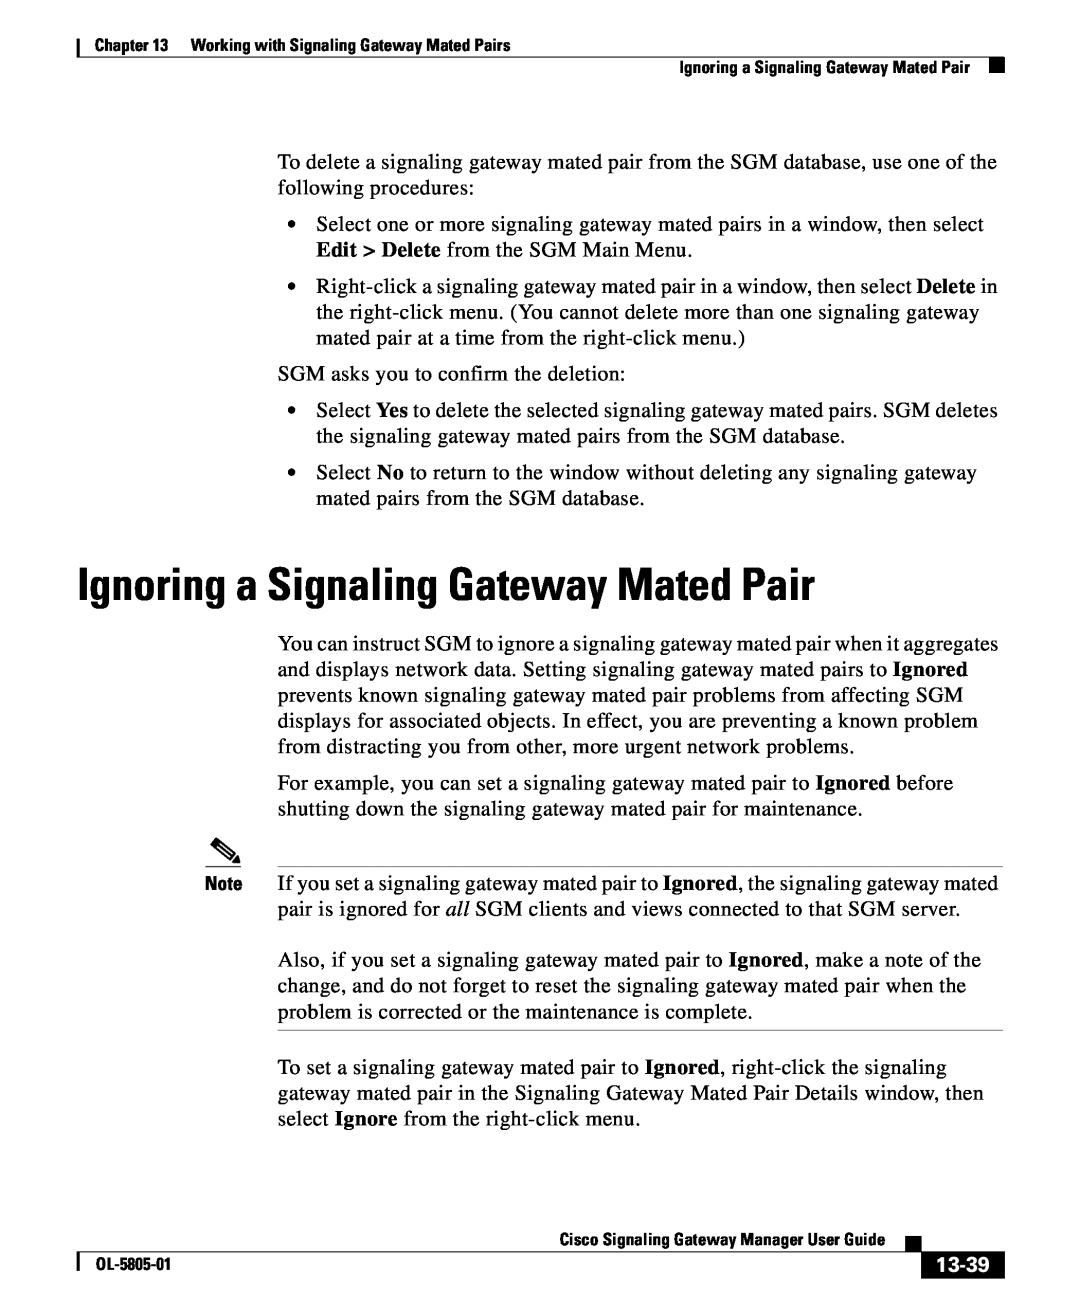 Cisco Systems OL-5805-01 manual Ignoring a Signaling Gateway Mated Pair, 13-39 